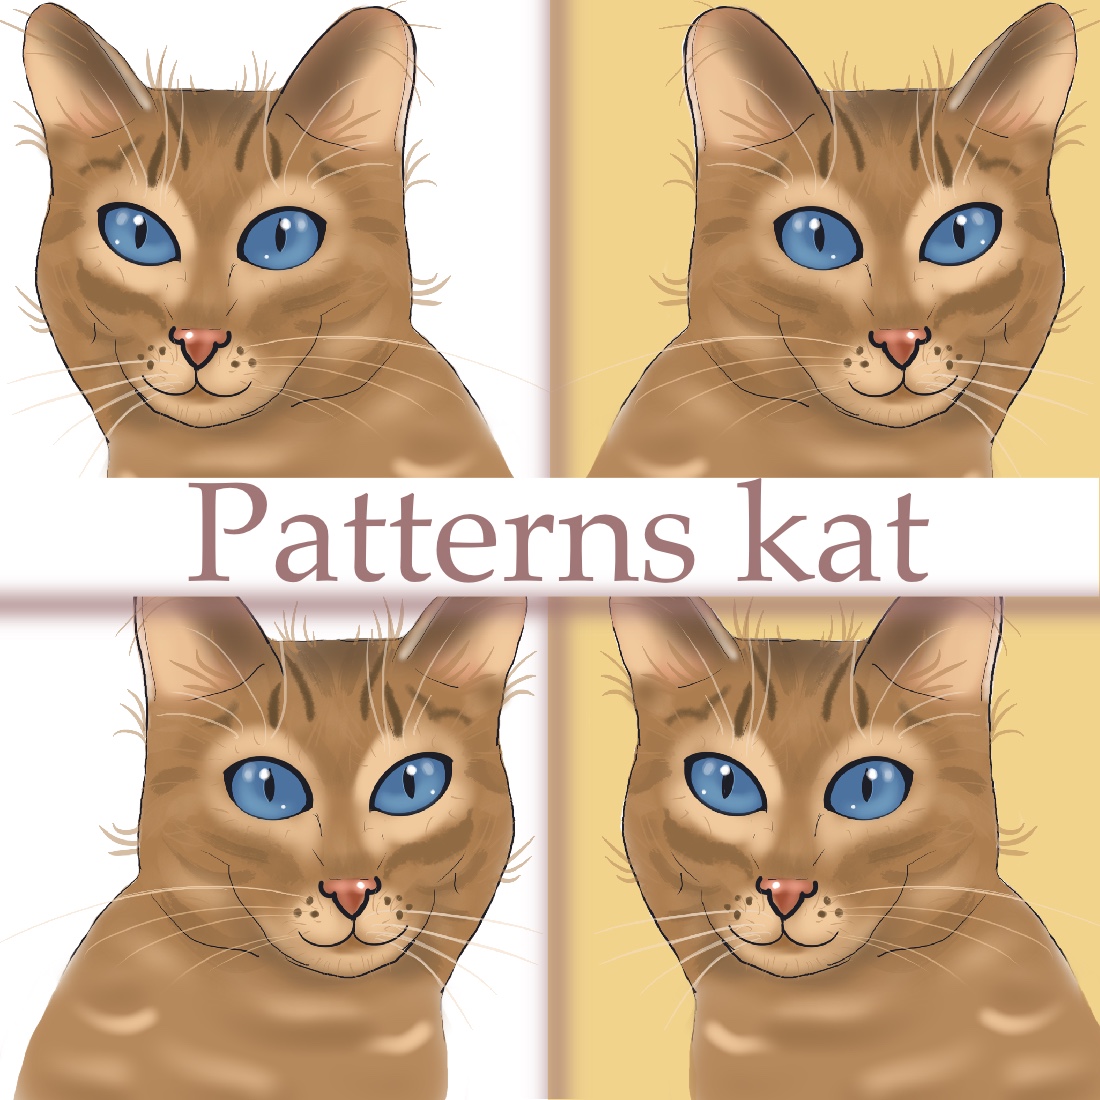 Patterns Kat cover image.